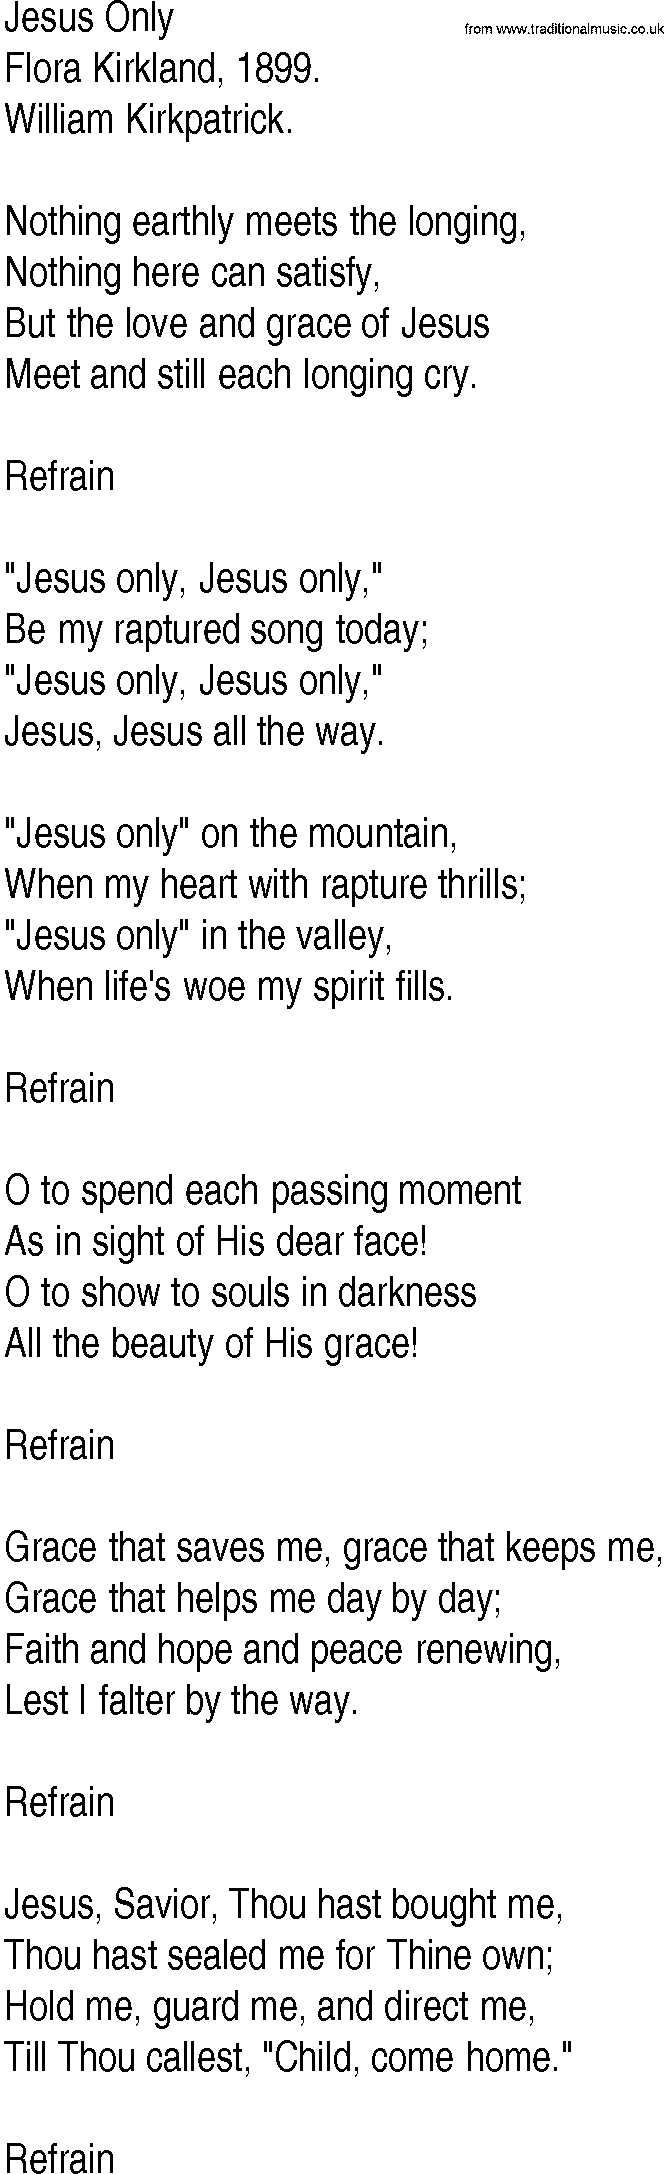 Hymn and Gospel Song: Jesus Only by Flora Kirkland lyrics